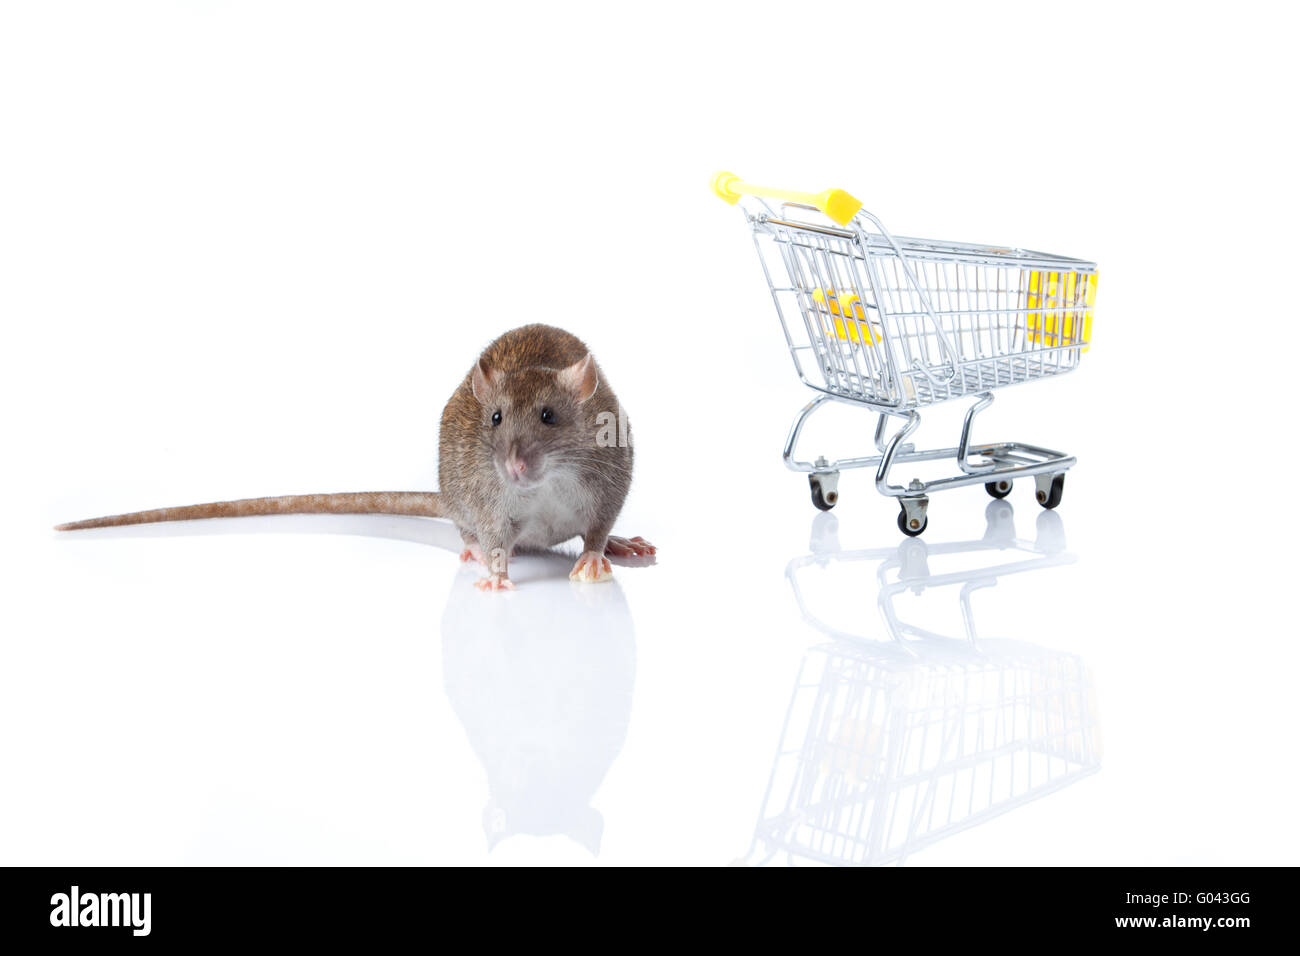 https://c8.alamy.com/comp/G043GG/rat-and-the-shopping-cart-a-rat-with-a-basket-G043GG.jpg